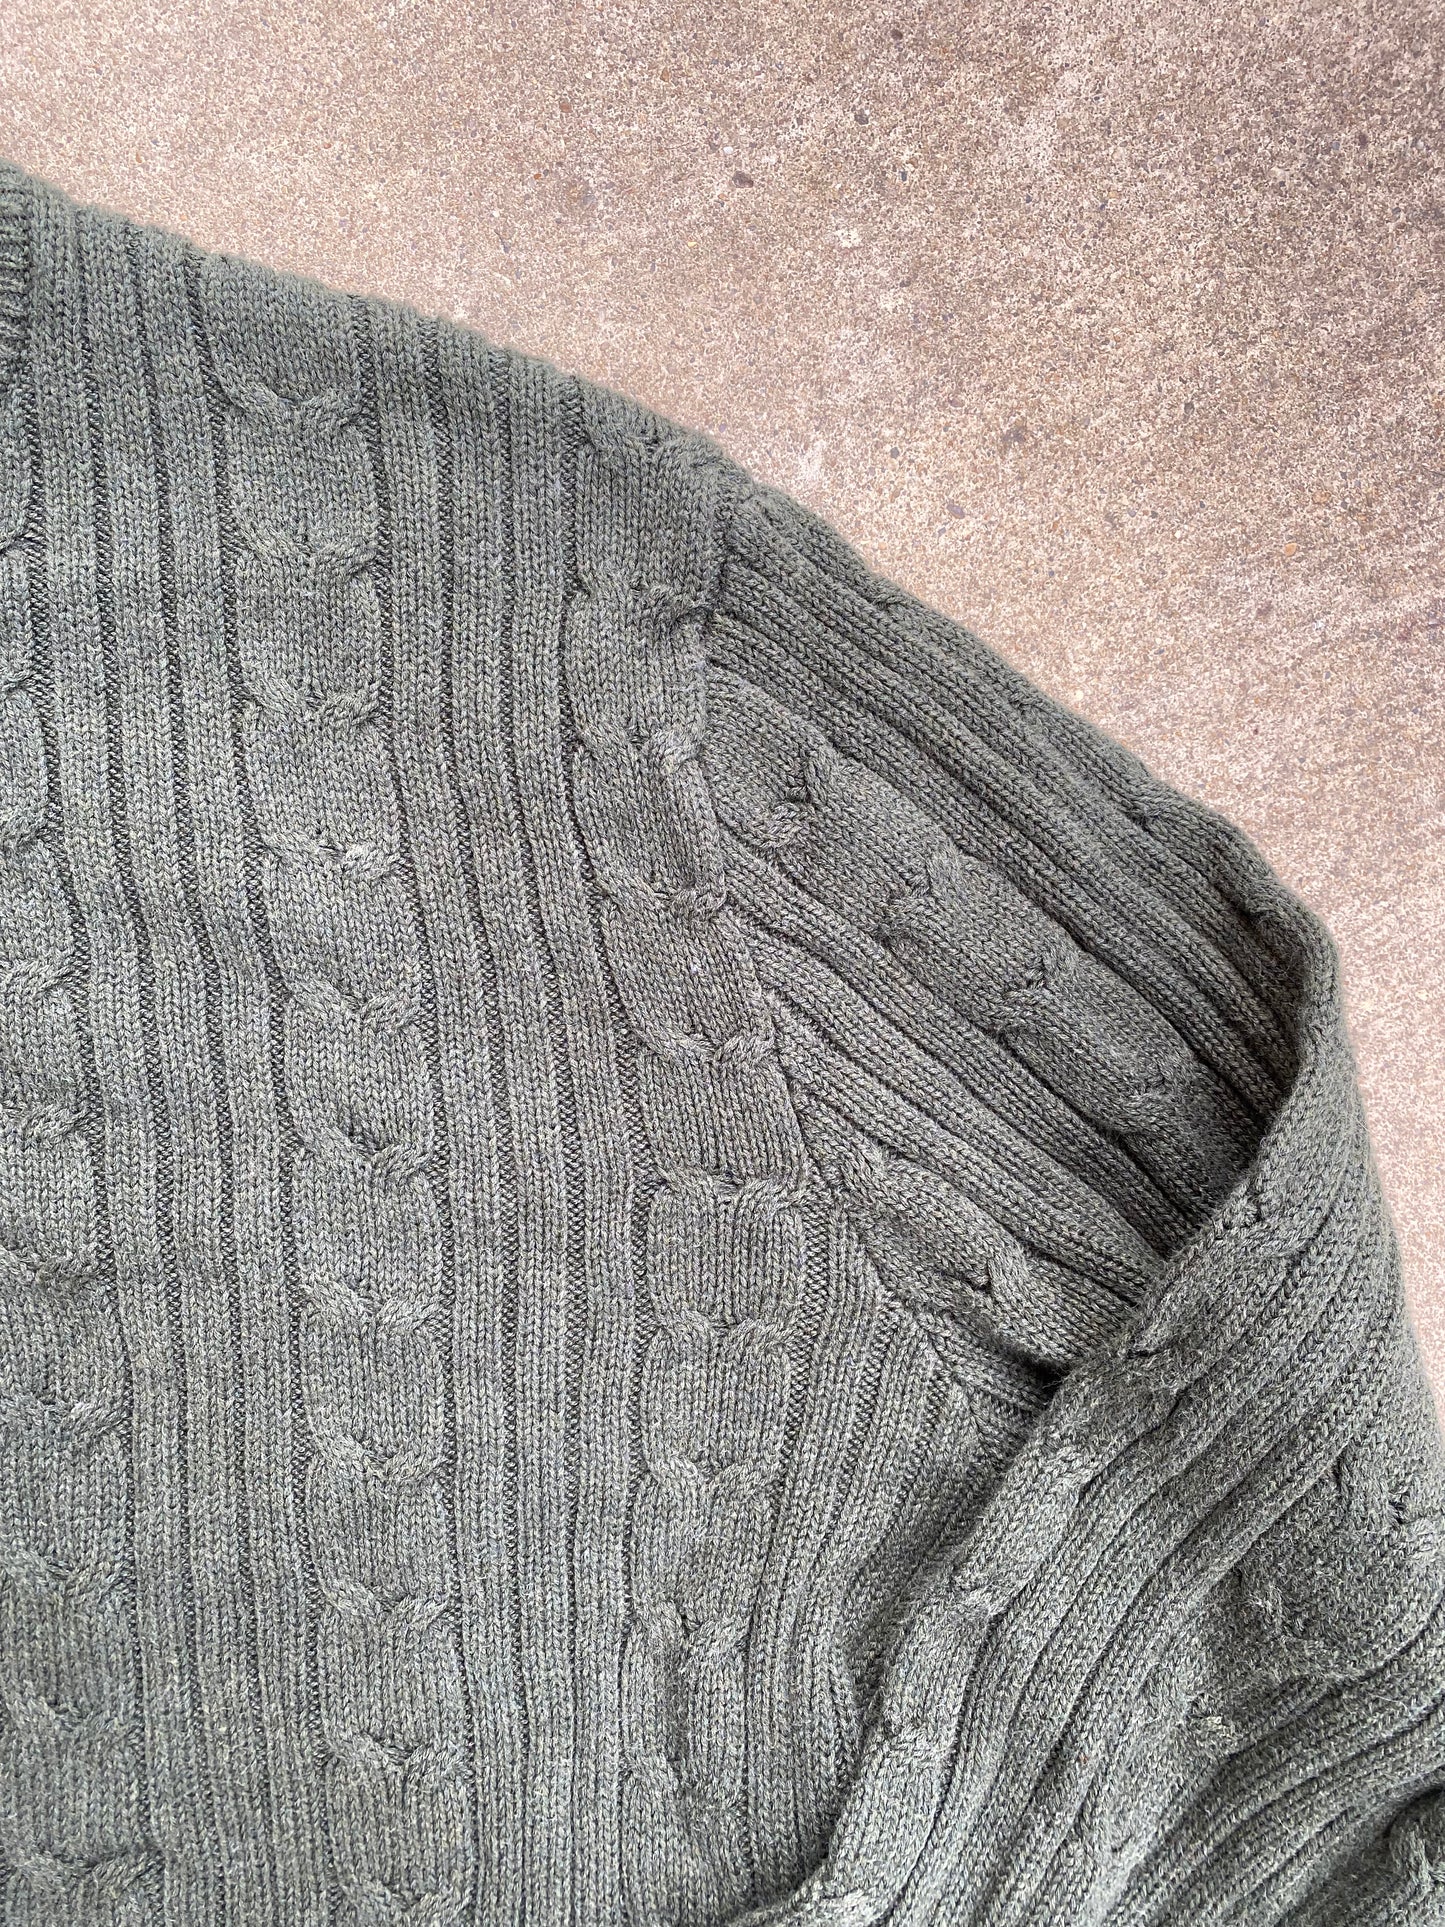 Eddie Bauer Green Cableknit Cotton Sweater - Brimm Archive Wardrobe Research